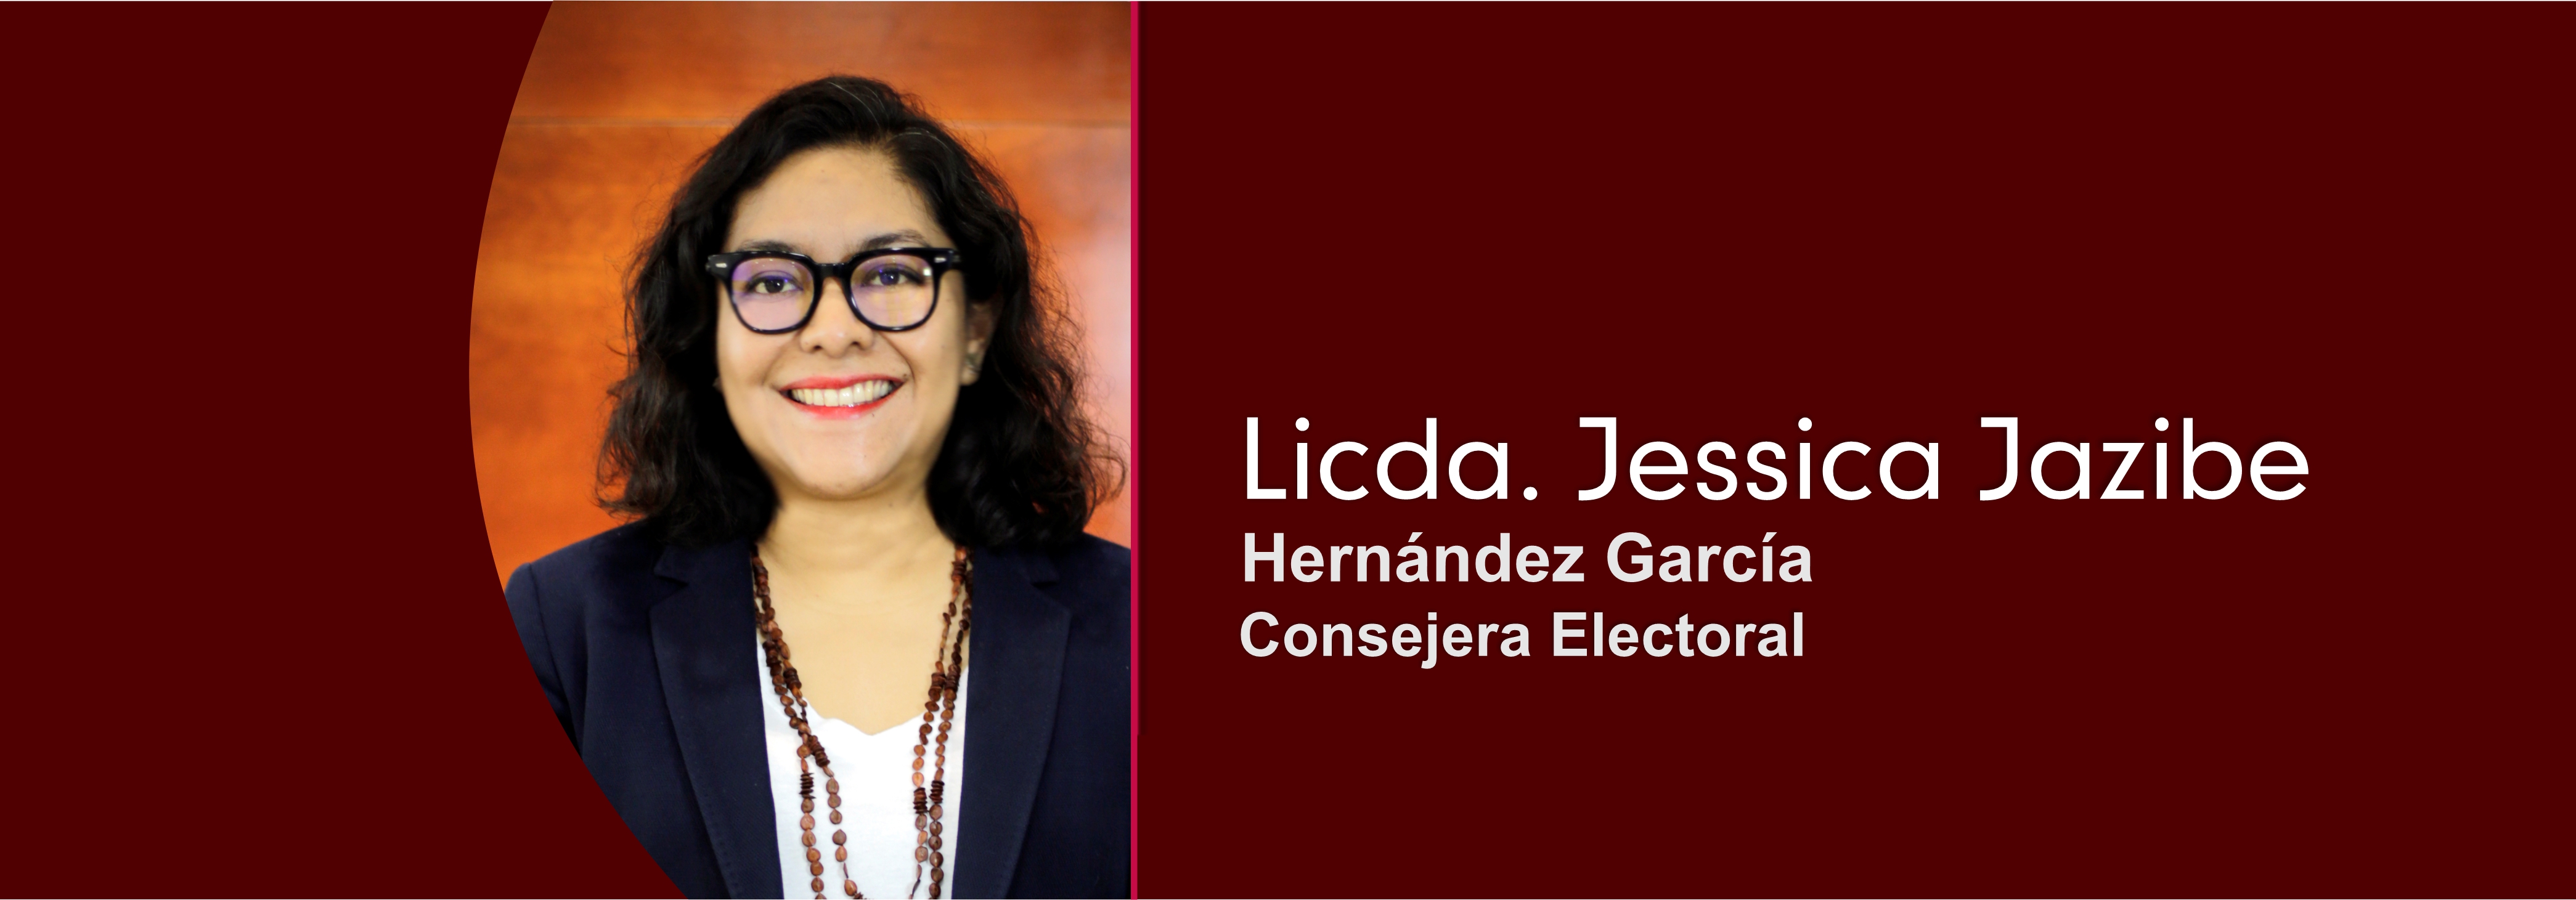 Jessica Jazibe Hernández García